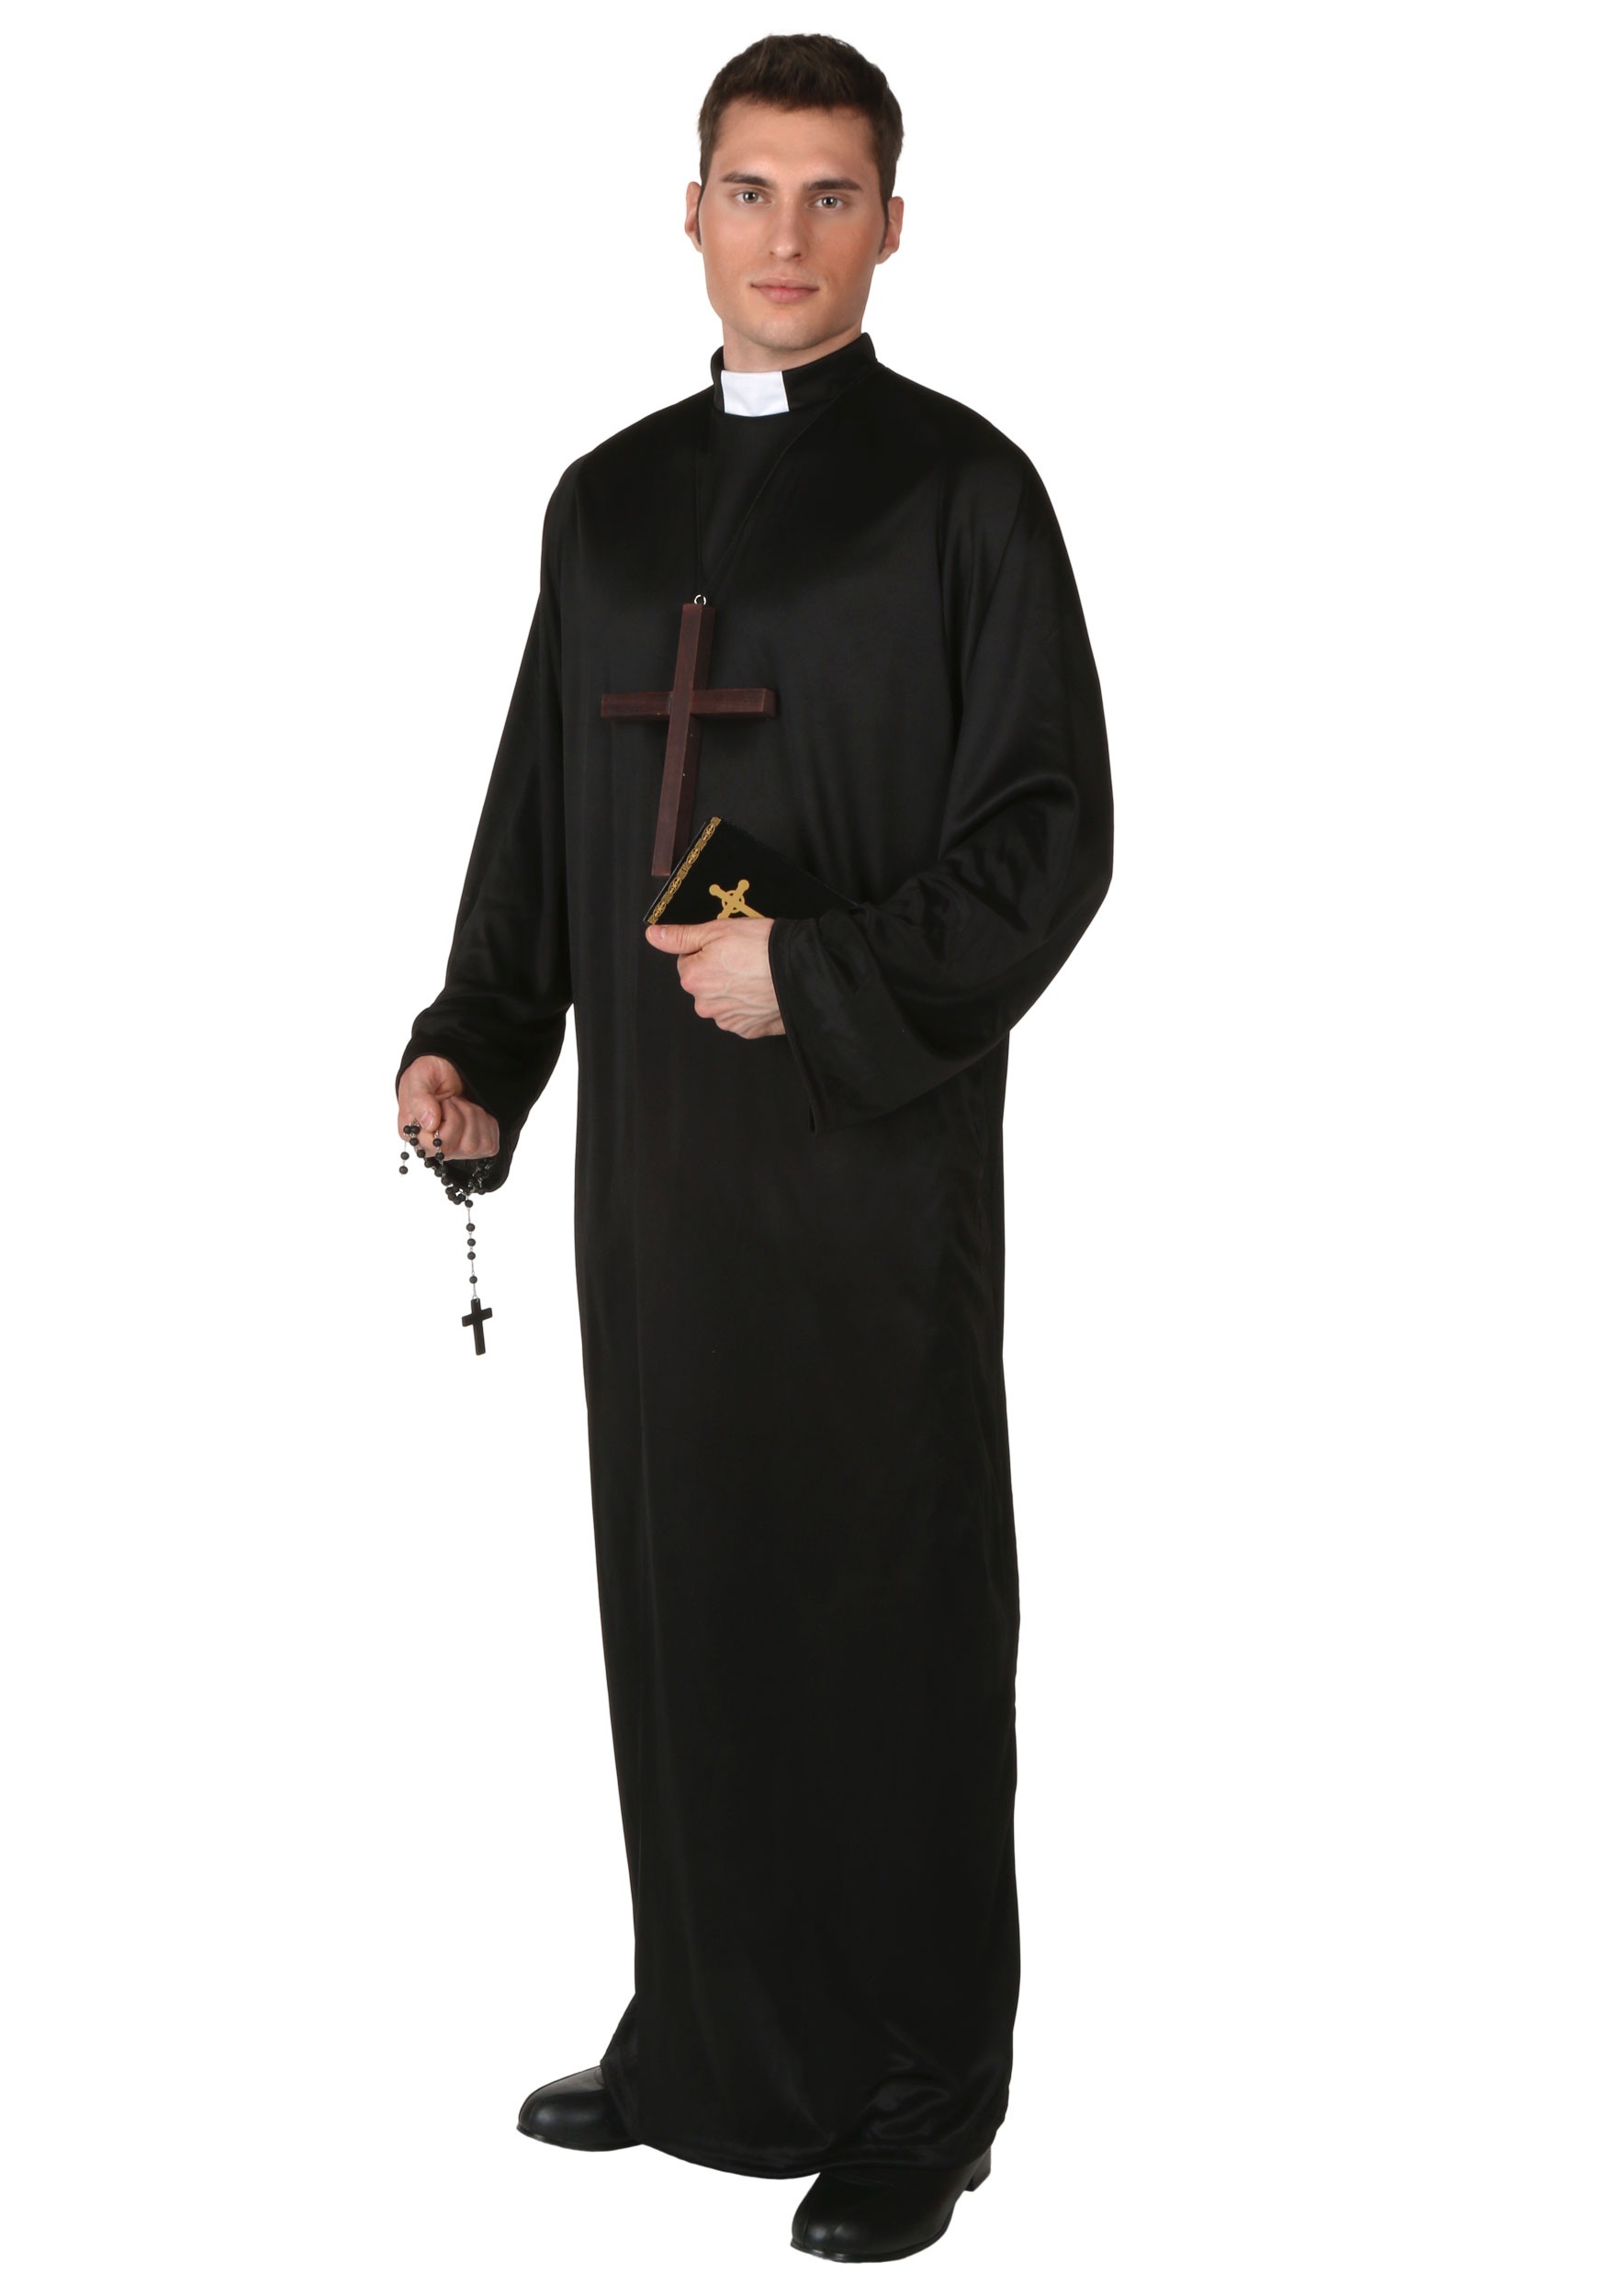 Priest #7